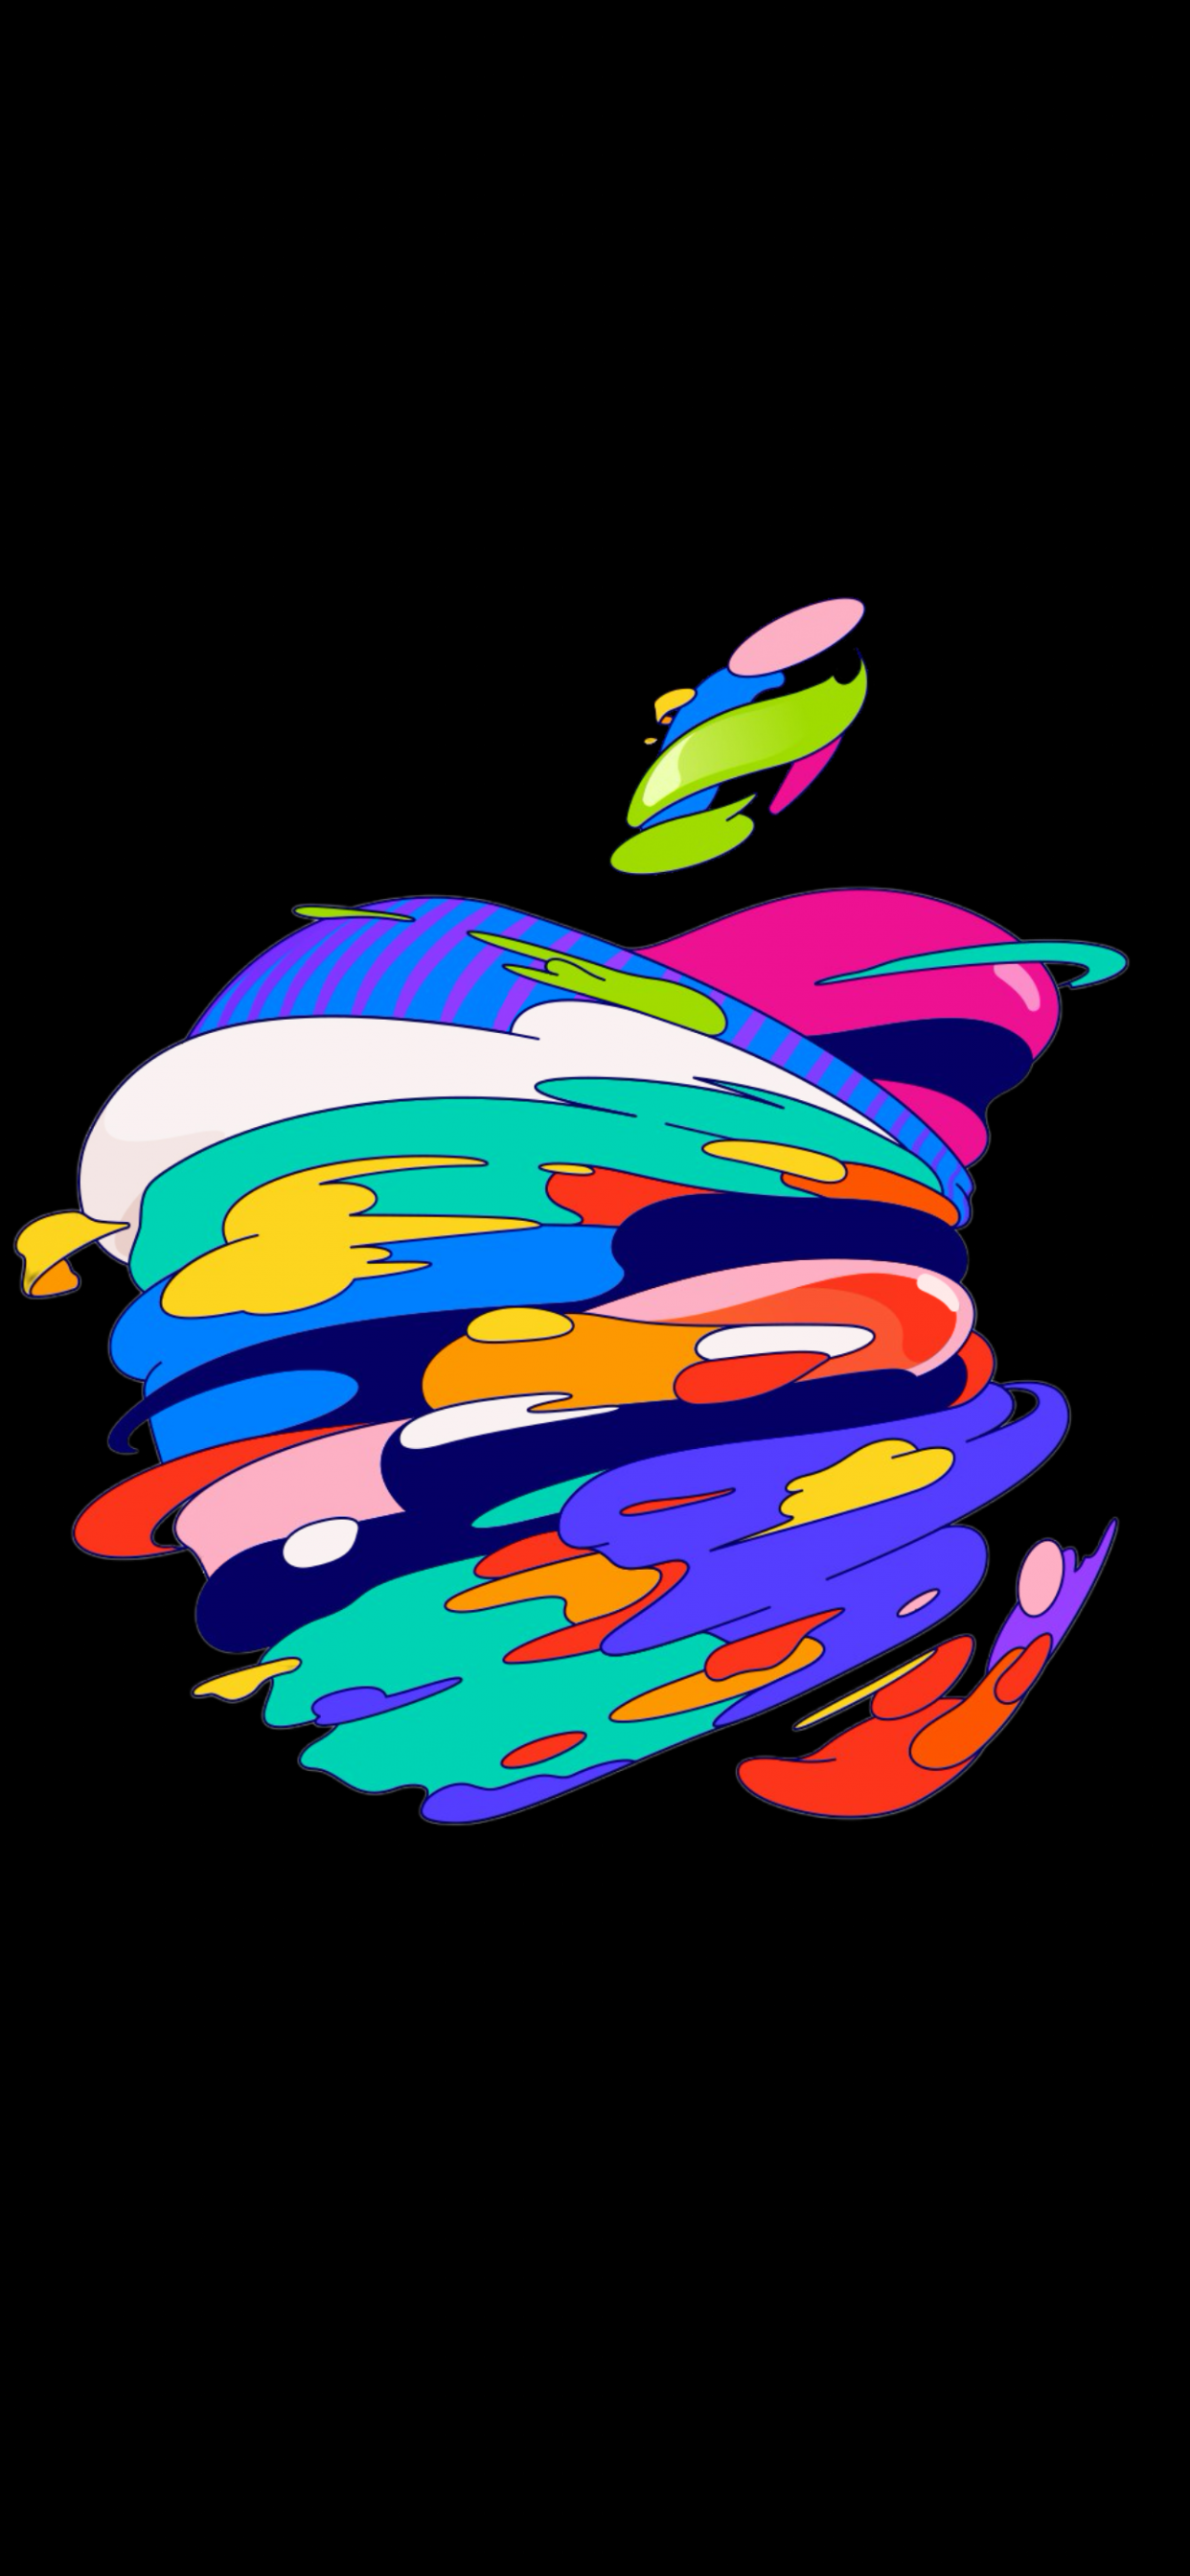 Apple Hintergrundbild 1242x2688. Apple logo Wallpaper 4K, Mac, Black background, Colorful